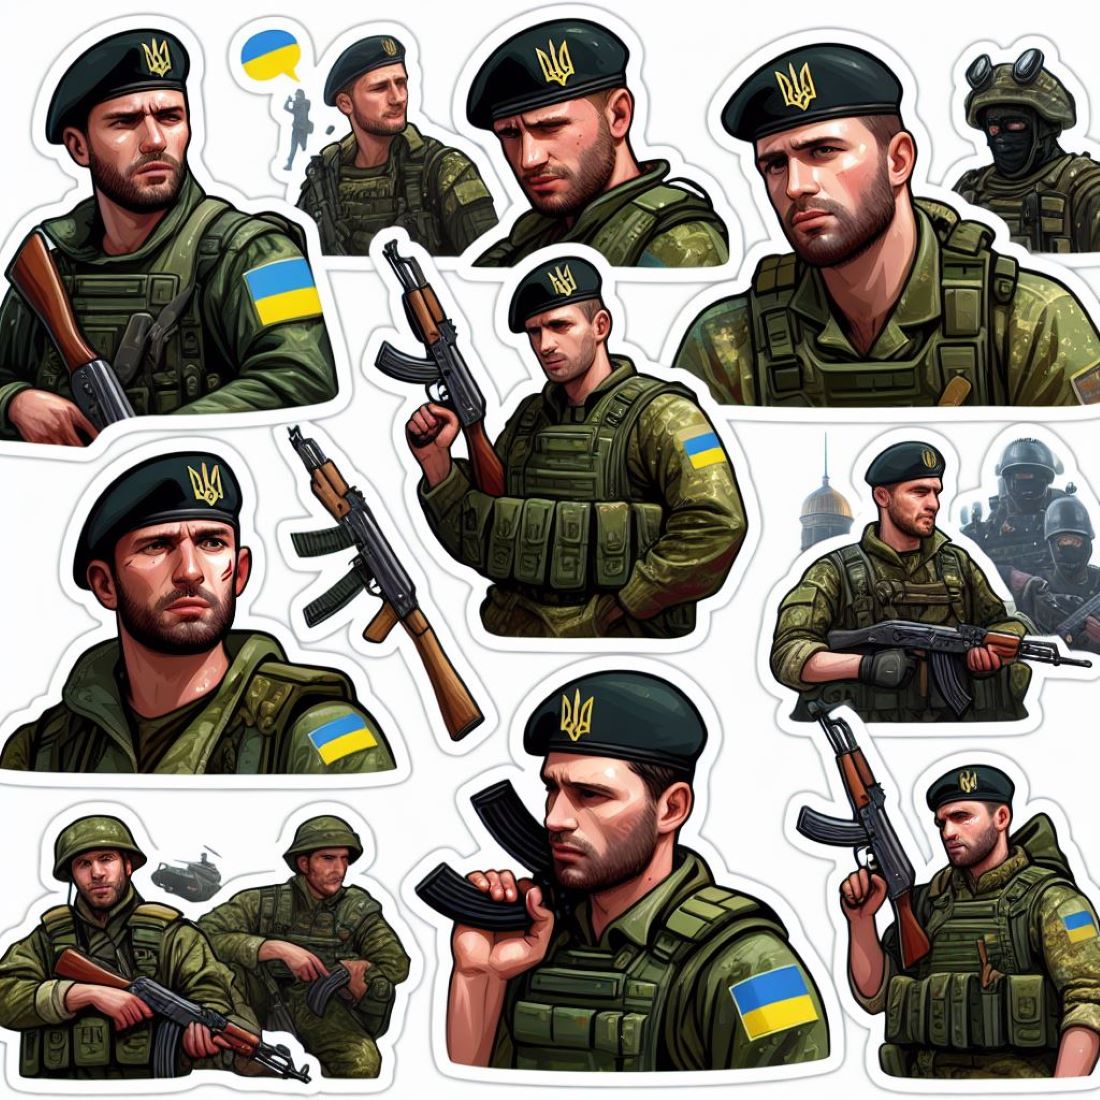 Ukrainian army preview image.